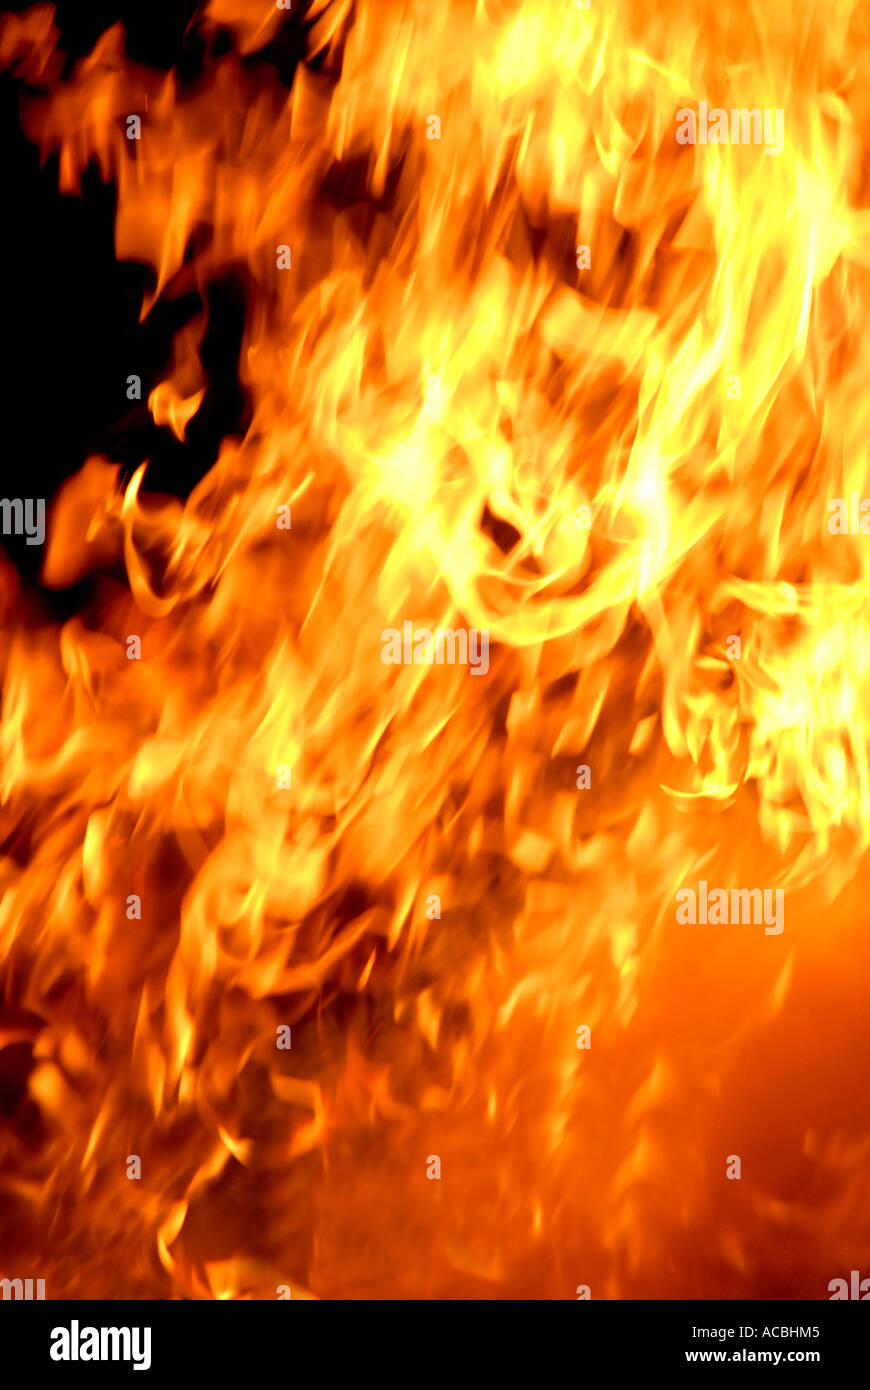 Flame fire intense burning Stock Photo